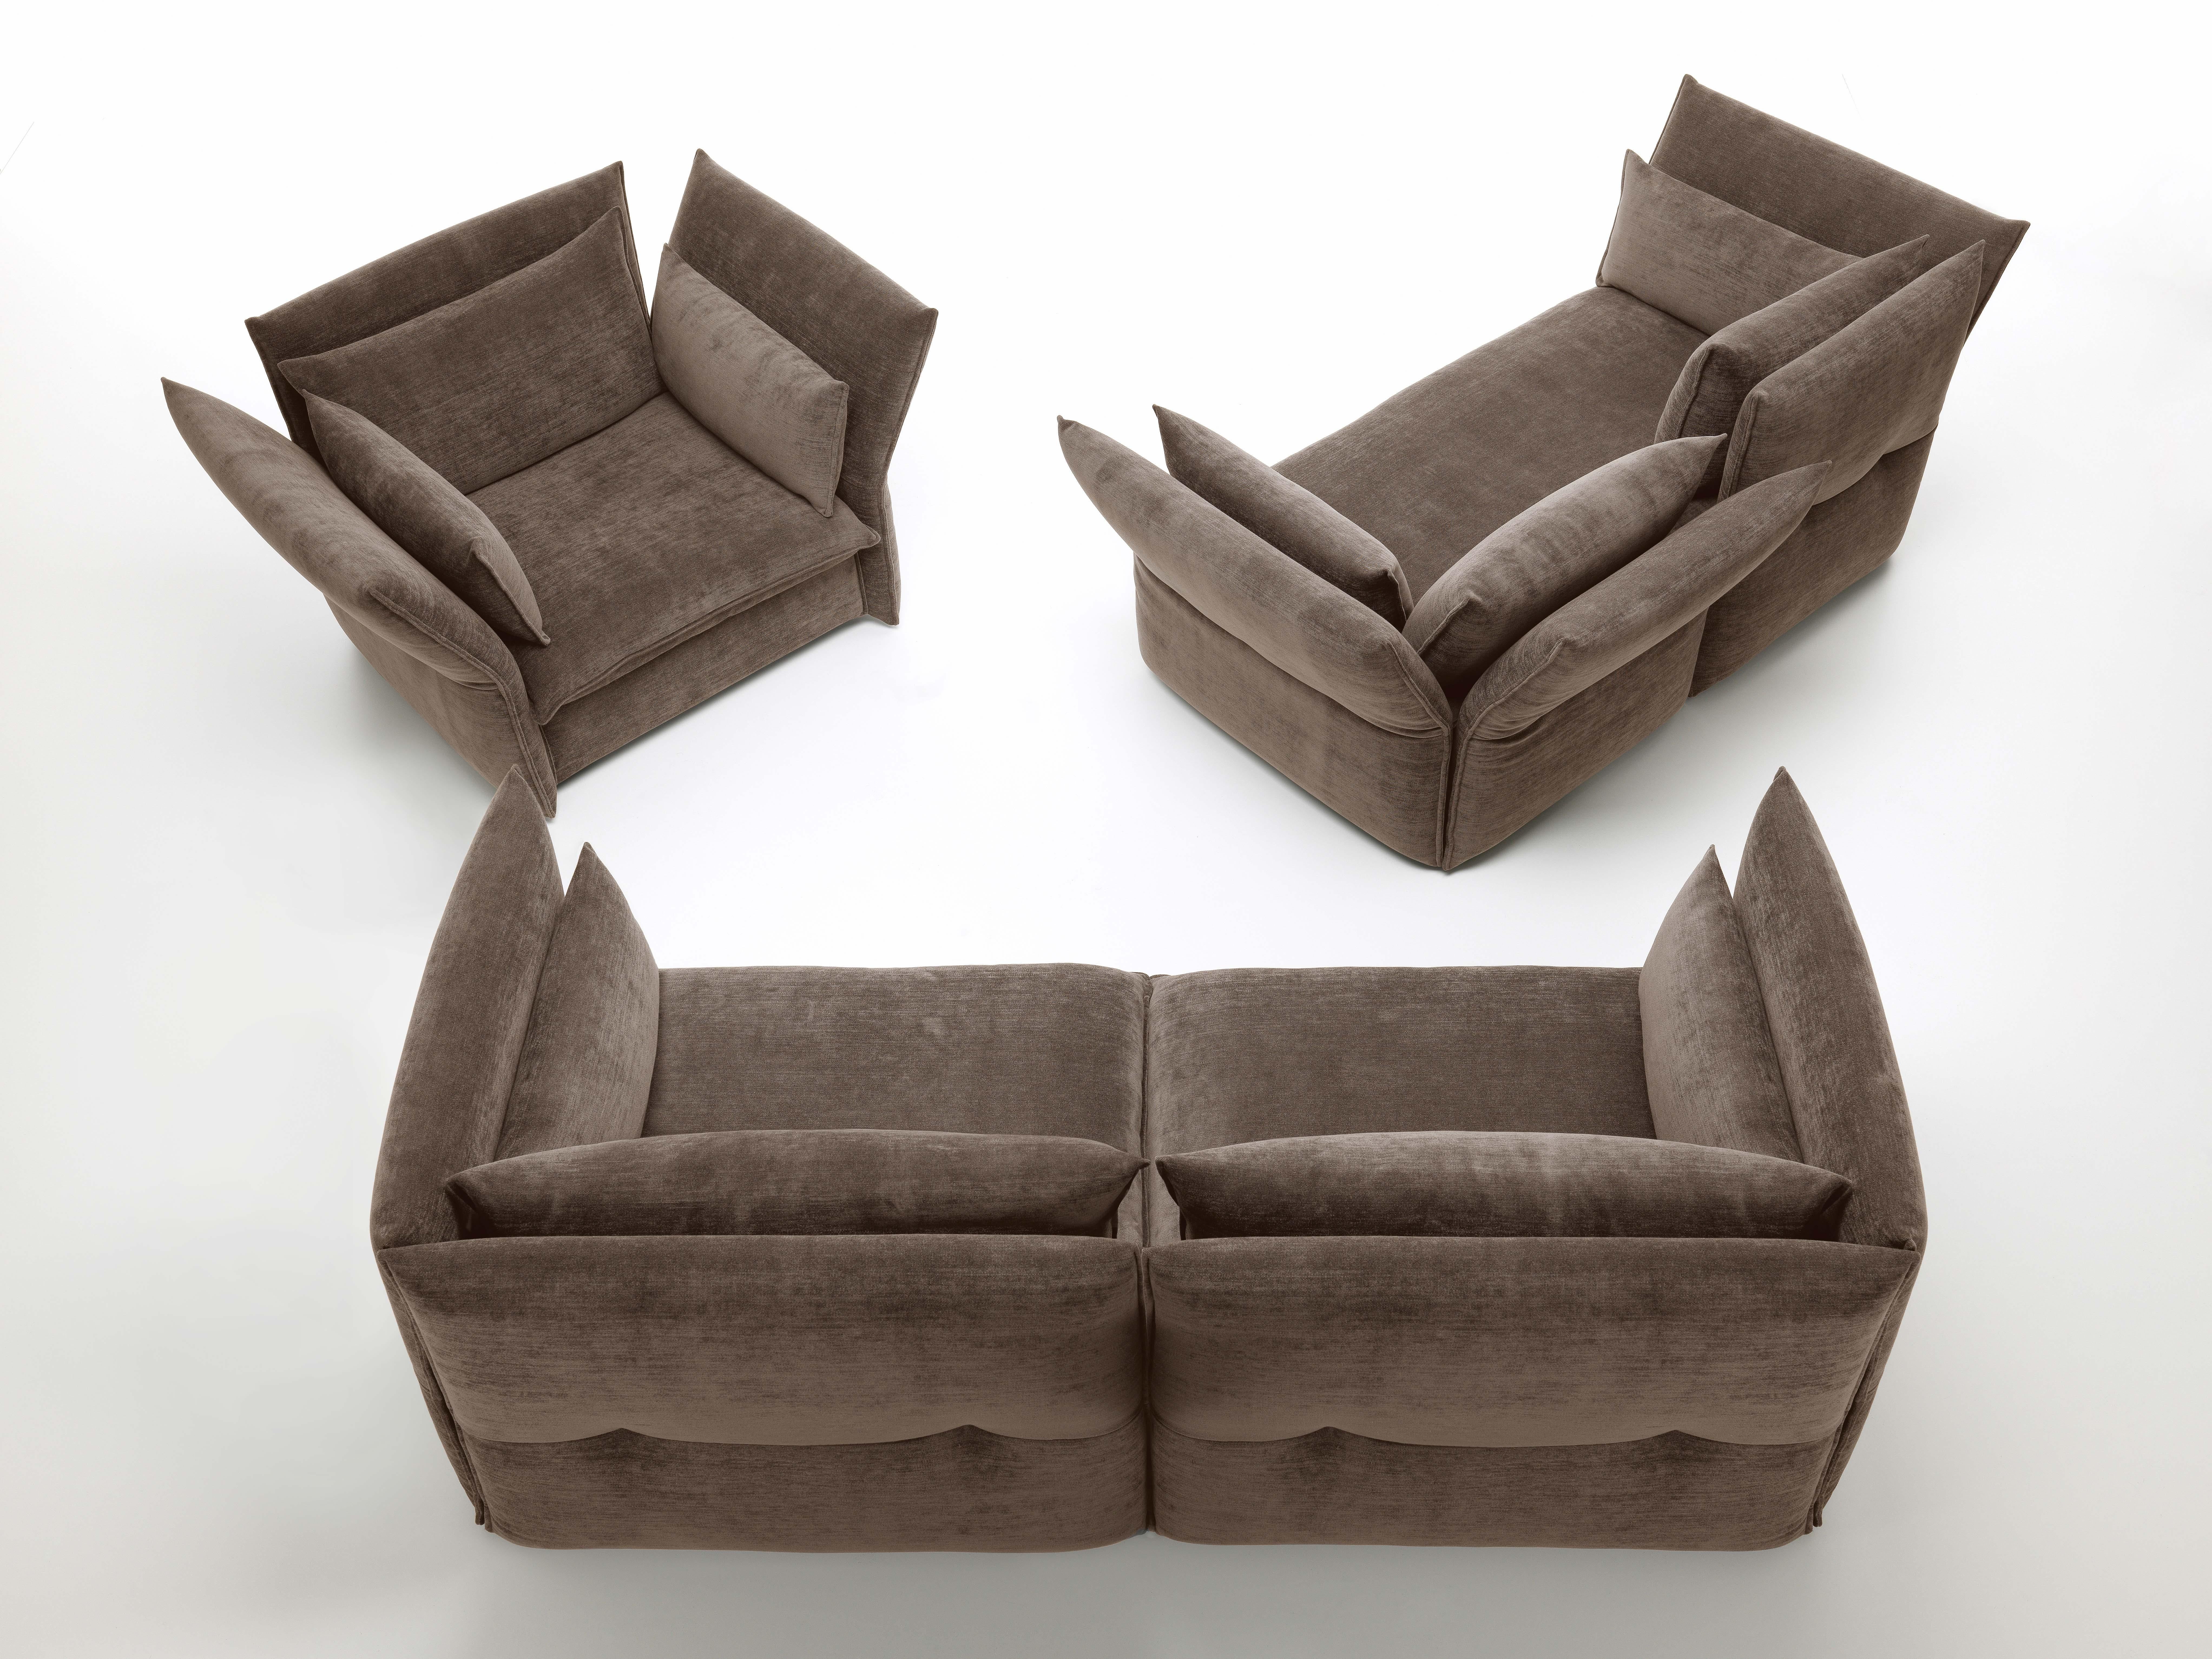 Vitra Mariposa 2-Seat Sofa in Sand & Avocado Credo by Edward Barber & Jay For Sale 7